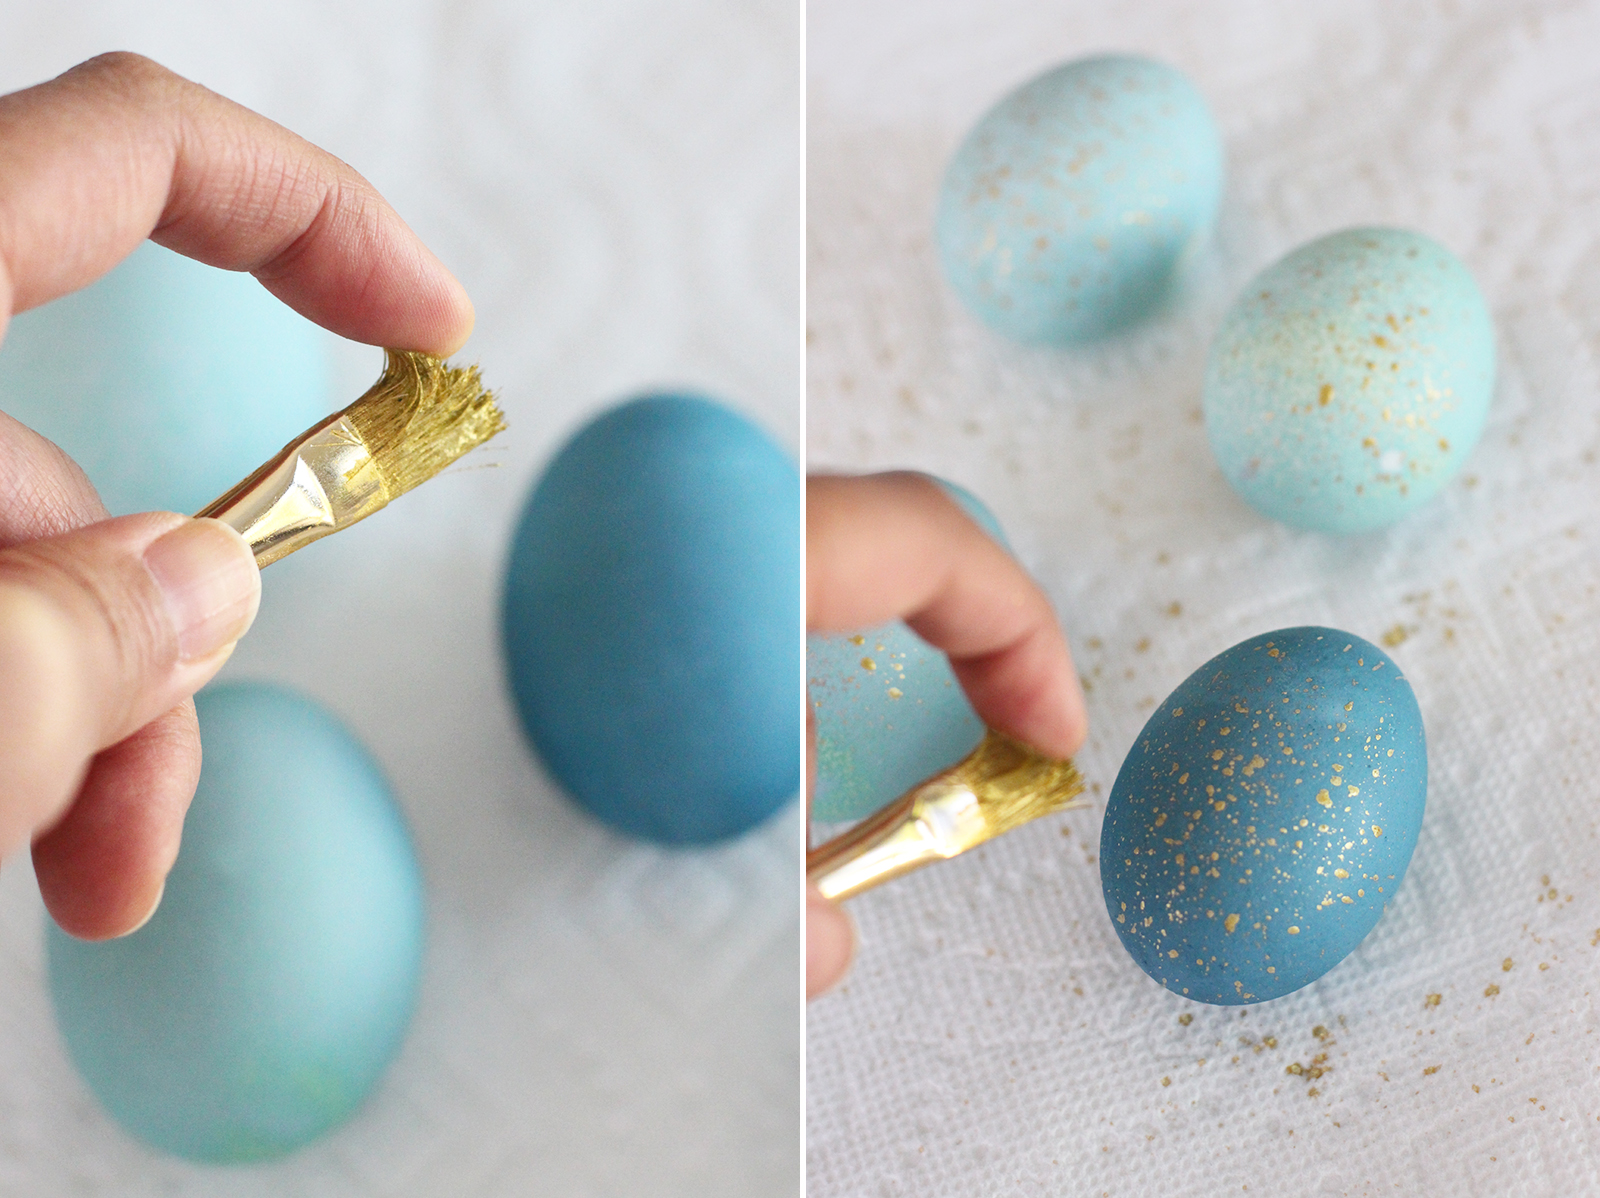 Чем покрасить яйца. Покраска яиц на Пасху. Красим яйца на Пасху. Пасхальные яйца способы окрашивания. Необычное окрашивание яиц к Пасхе.